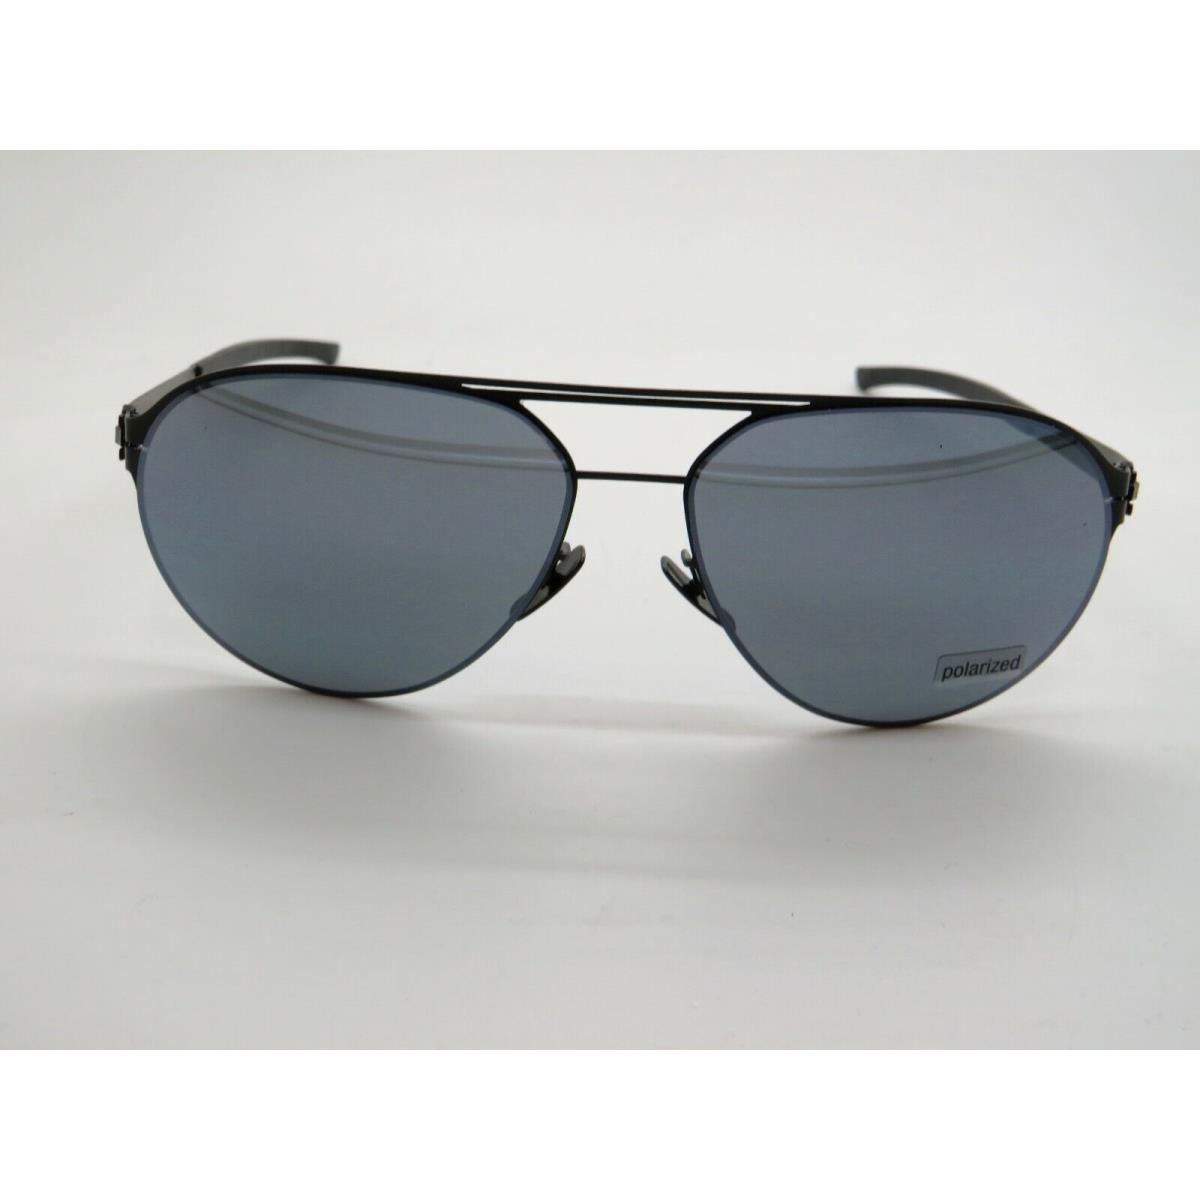 ic! berlin sunglasses  - Black Frame, Moonlight Lens 0